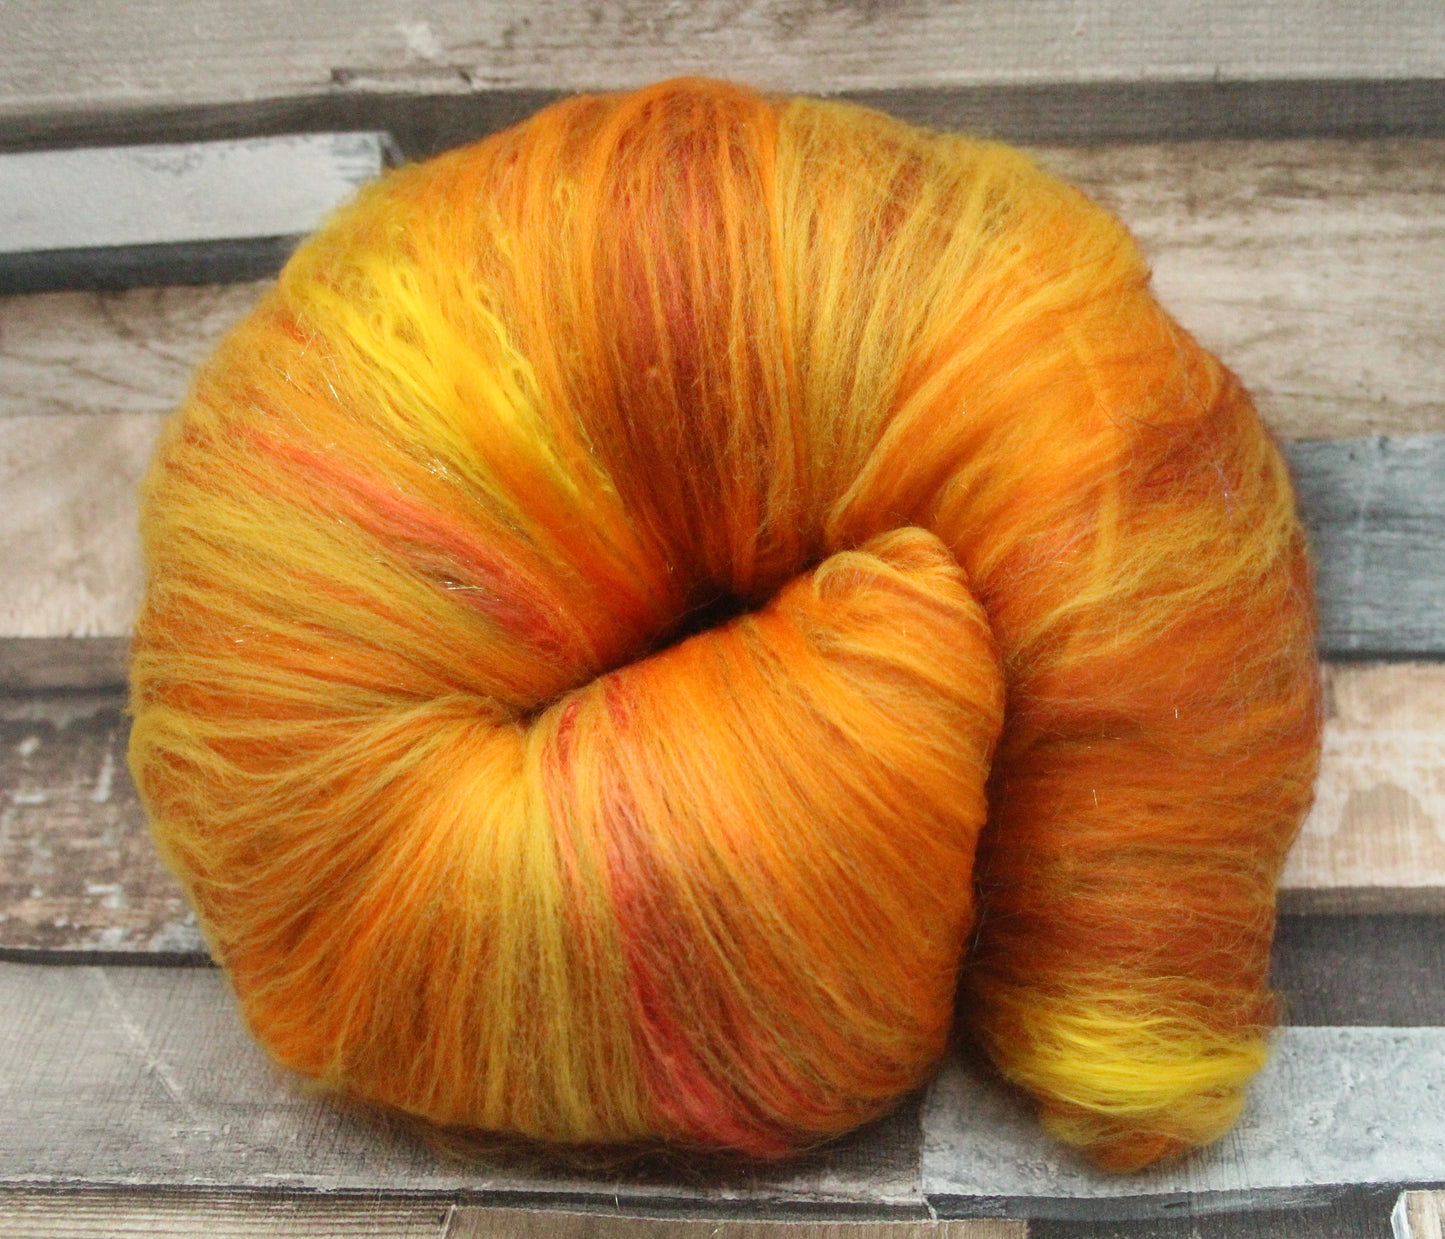 Super Soft 18.5 Micron Merino Wool Art Batt  - Orange Brown Yellow  - 104 grams 3.6 oz - Wool for felting, spinning and weaving